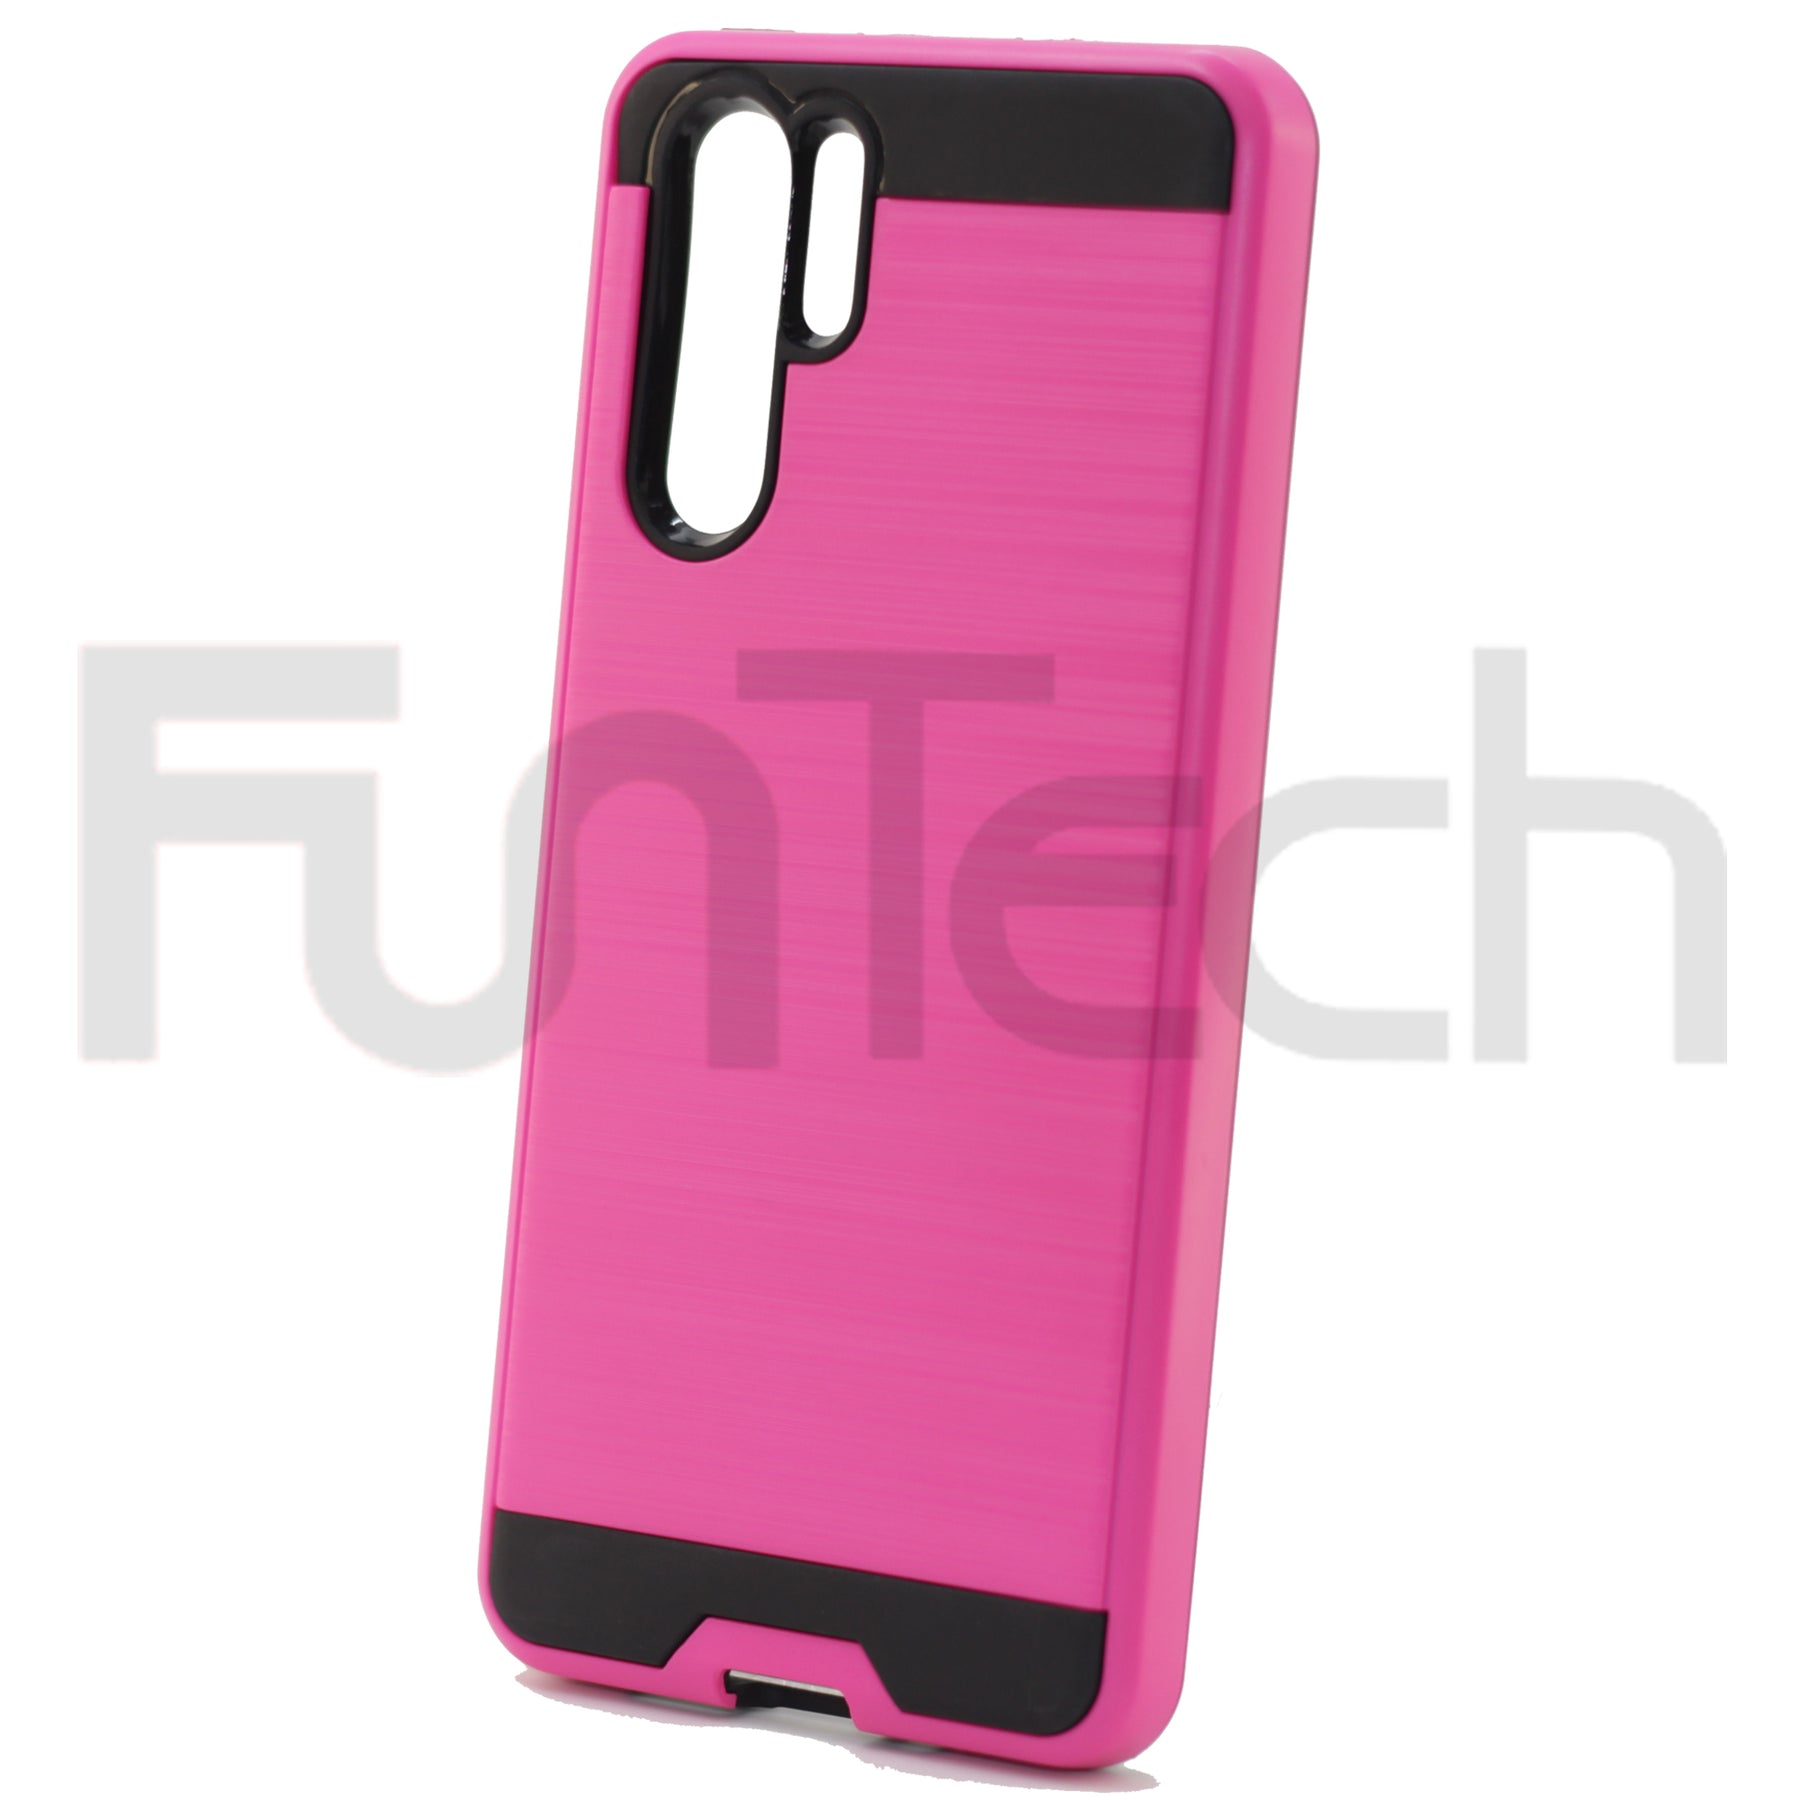 Huawei P30 Pro, Slim Armor Back Case, Color Pink,